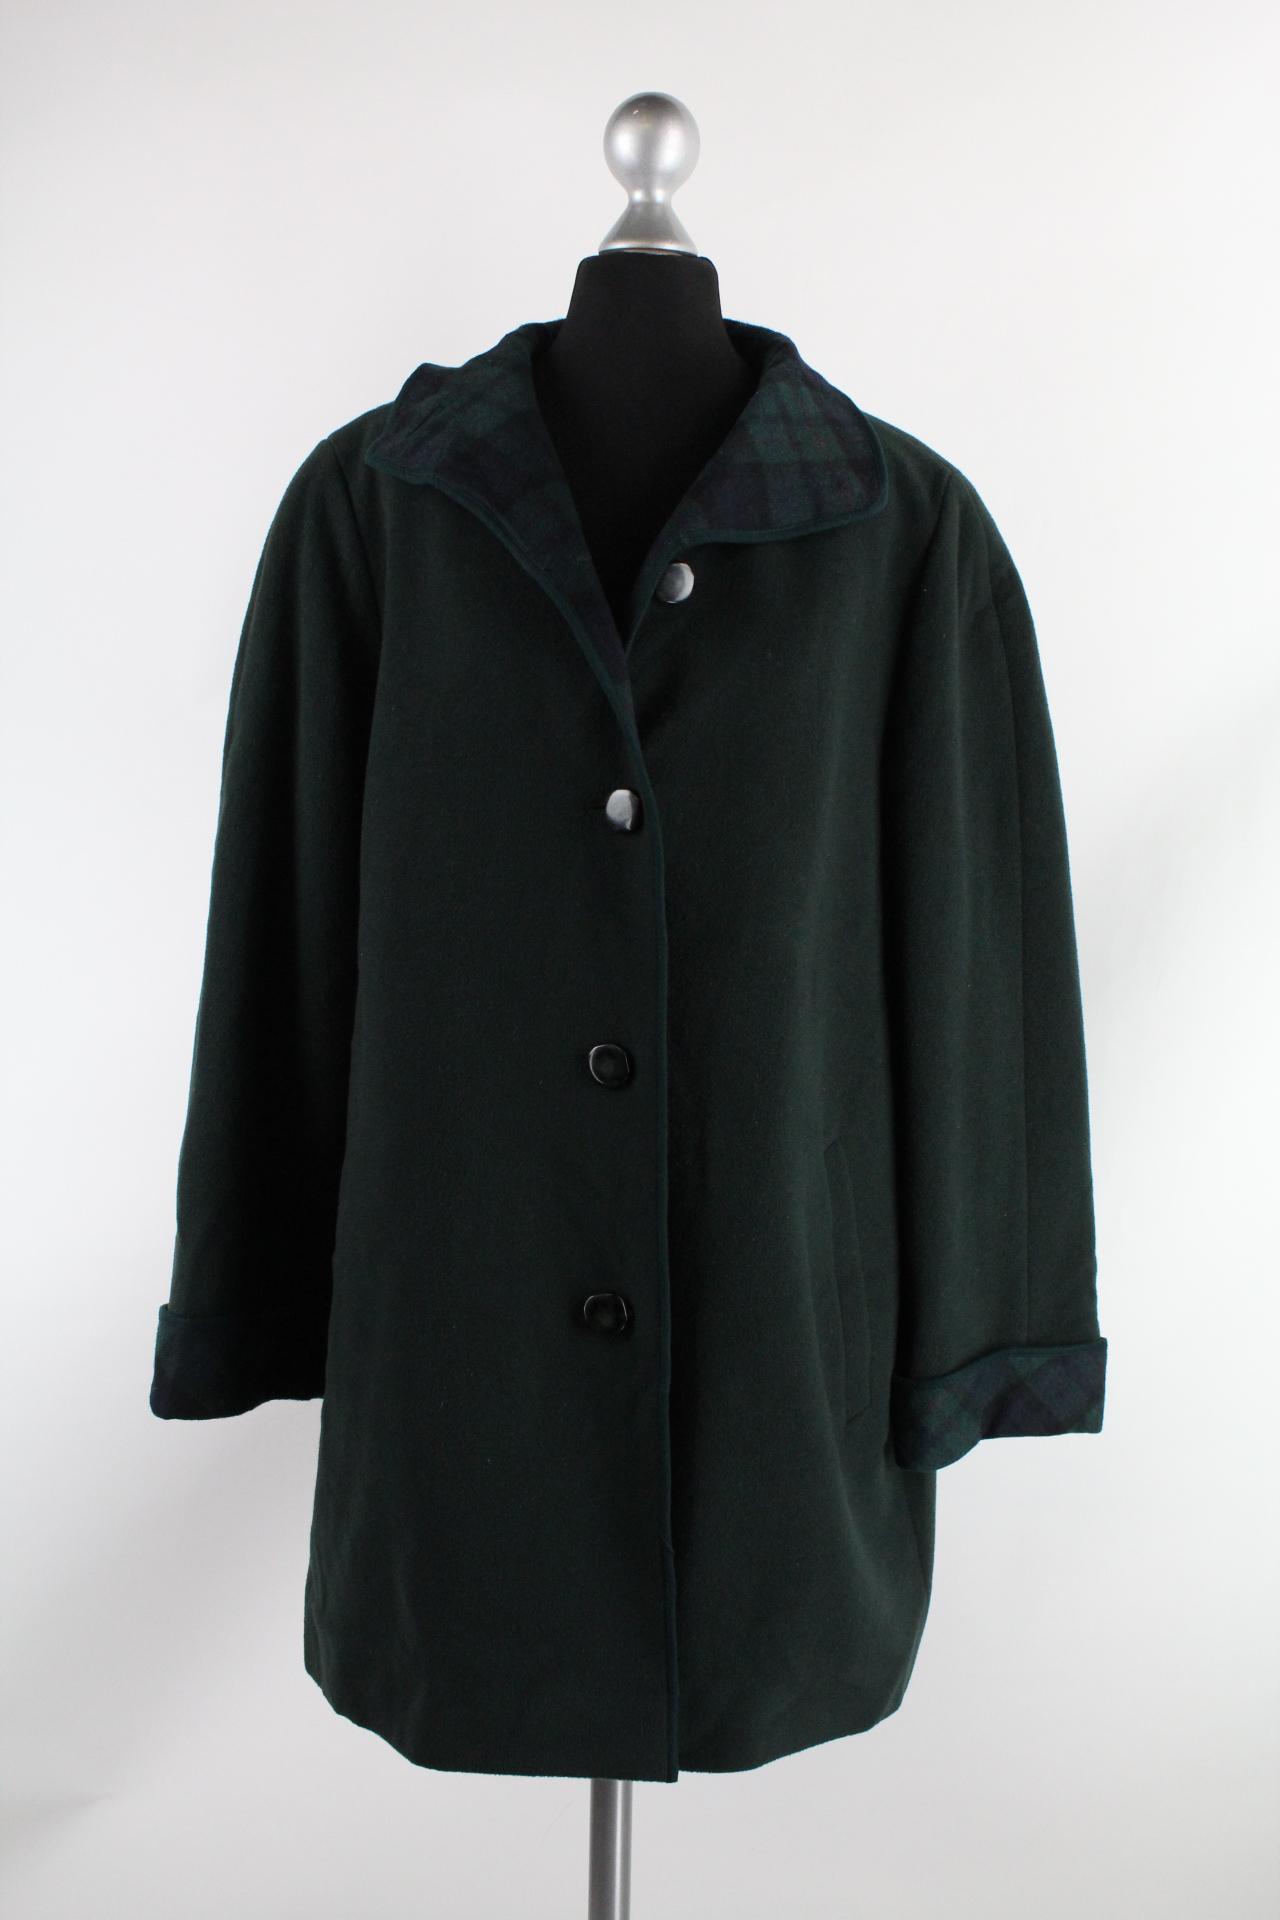 Westbury Damen-Mantel grün Größe 21